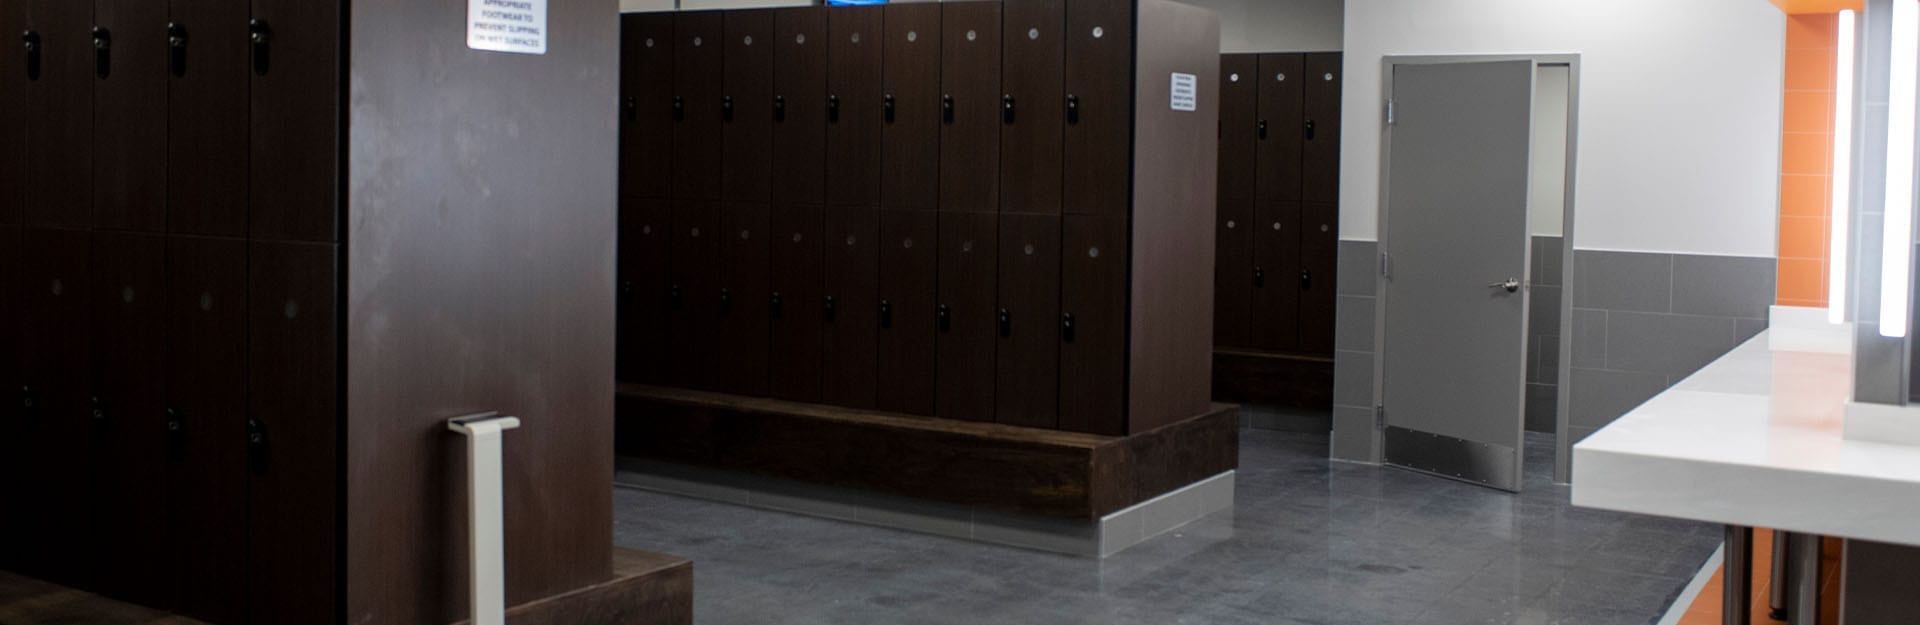 clean and spacious locker room at modern gym